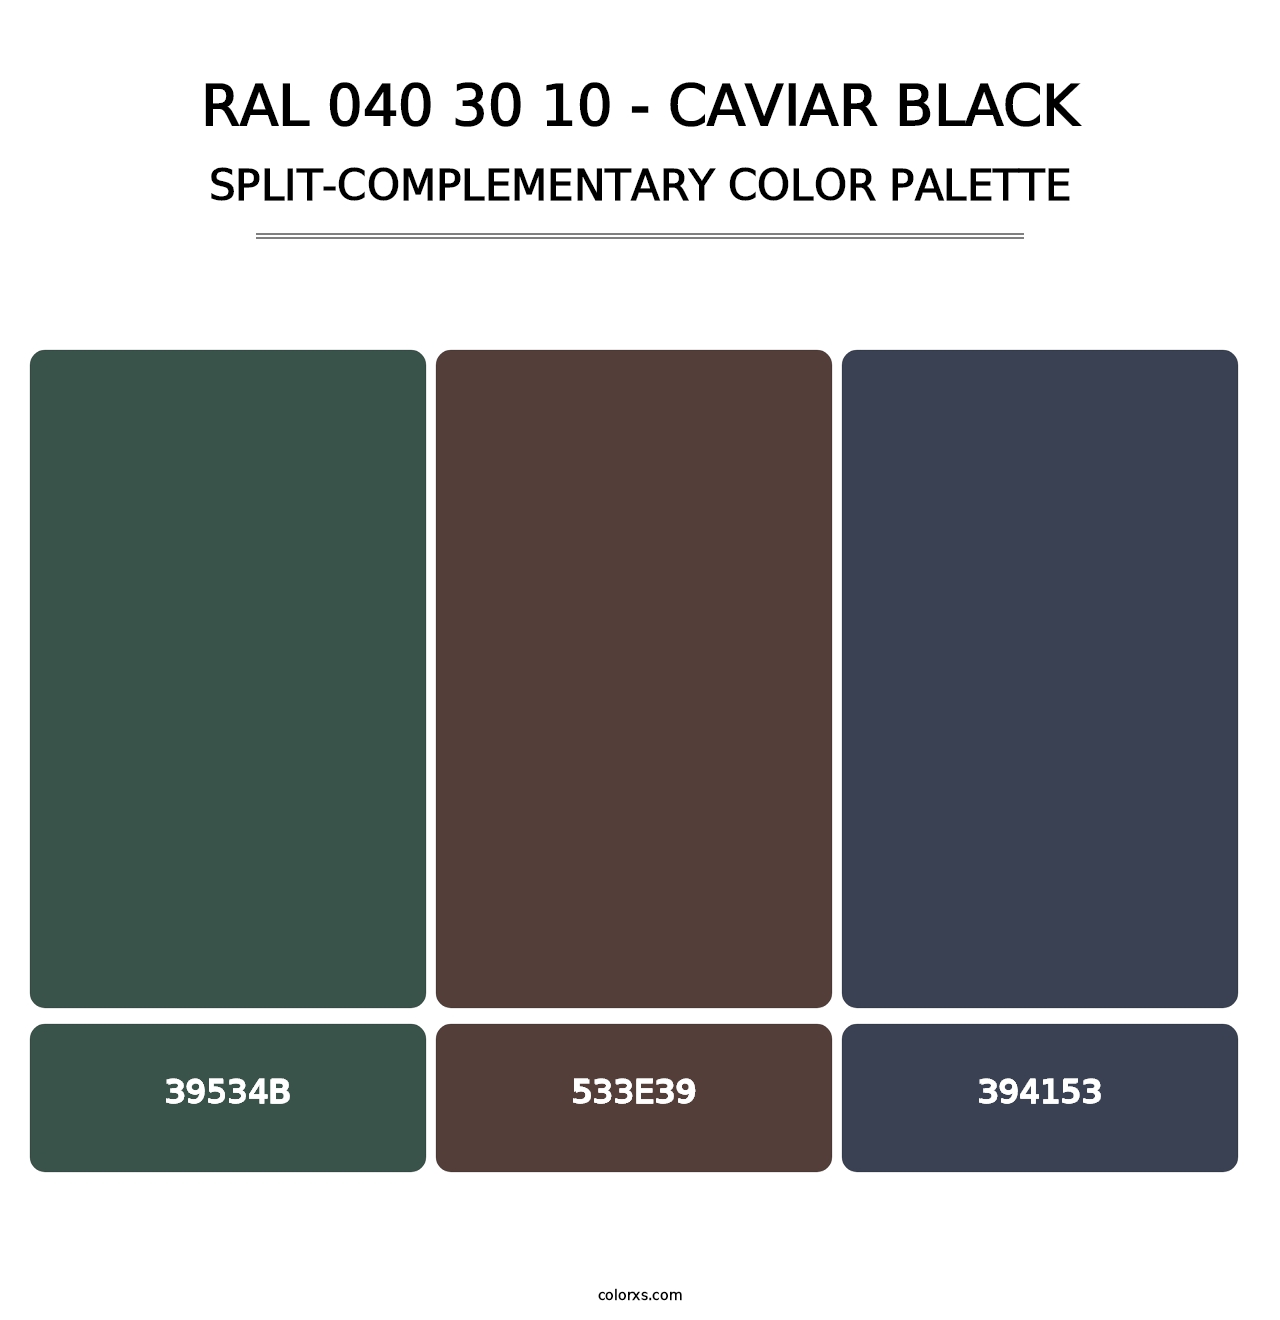 RAL 040 30 10 - Caviar Black - Split-Complementary Color Palette